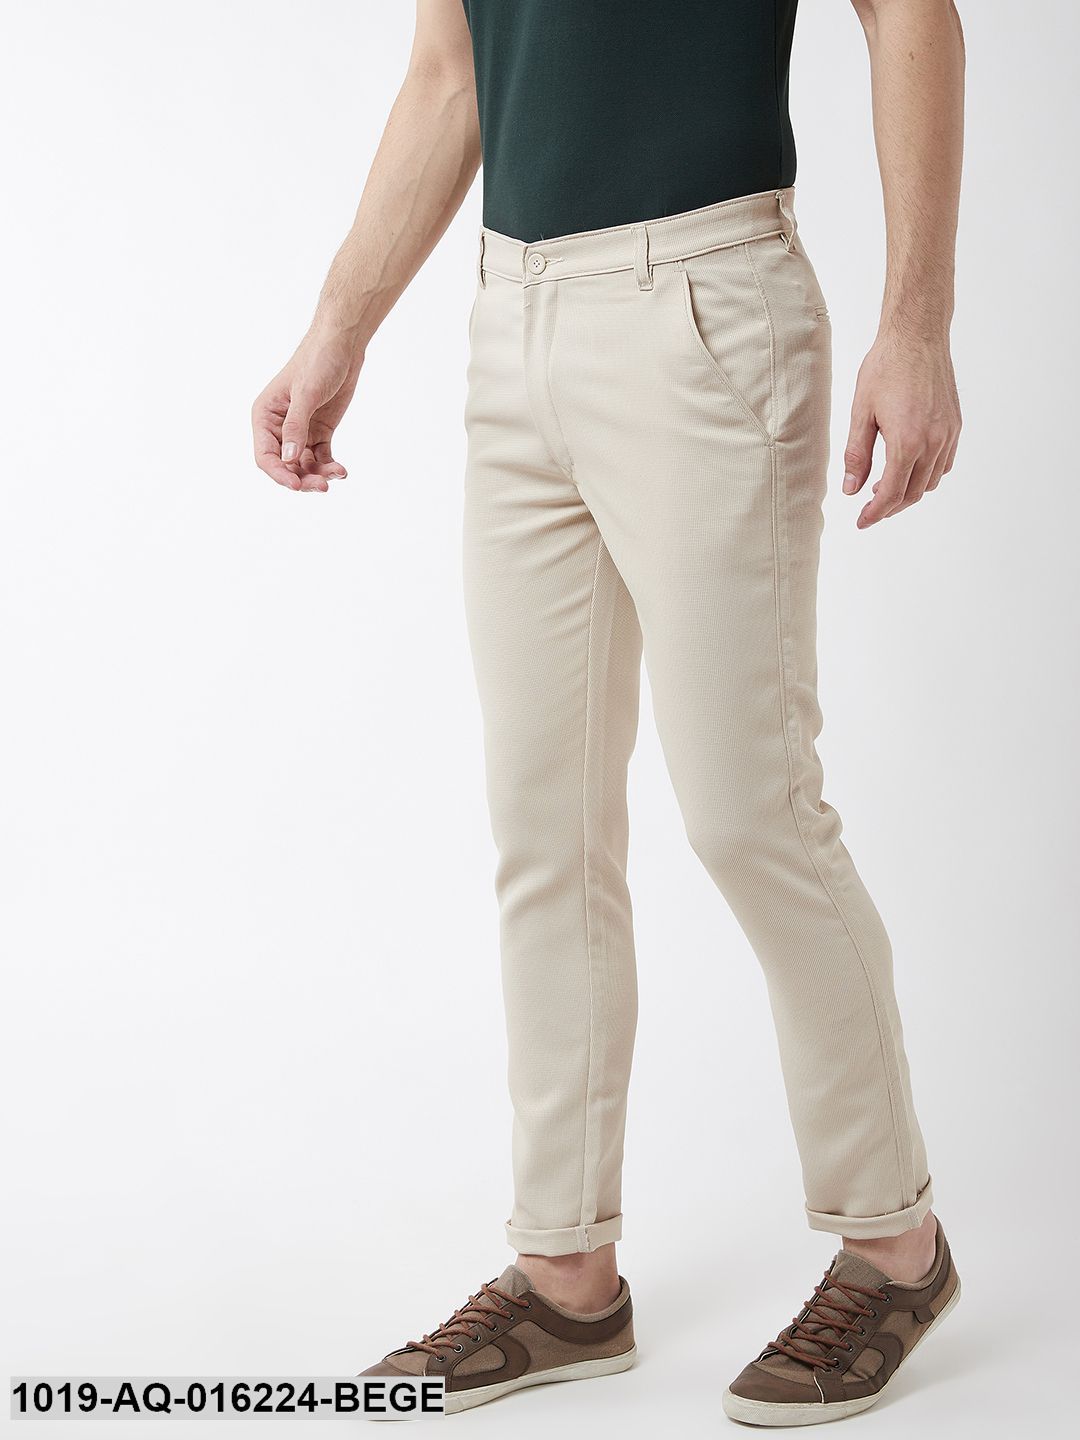 Men's Cotton Blend Beige Woven Design Casual Trousers - Final Clearance Sale